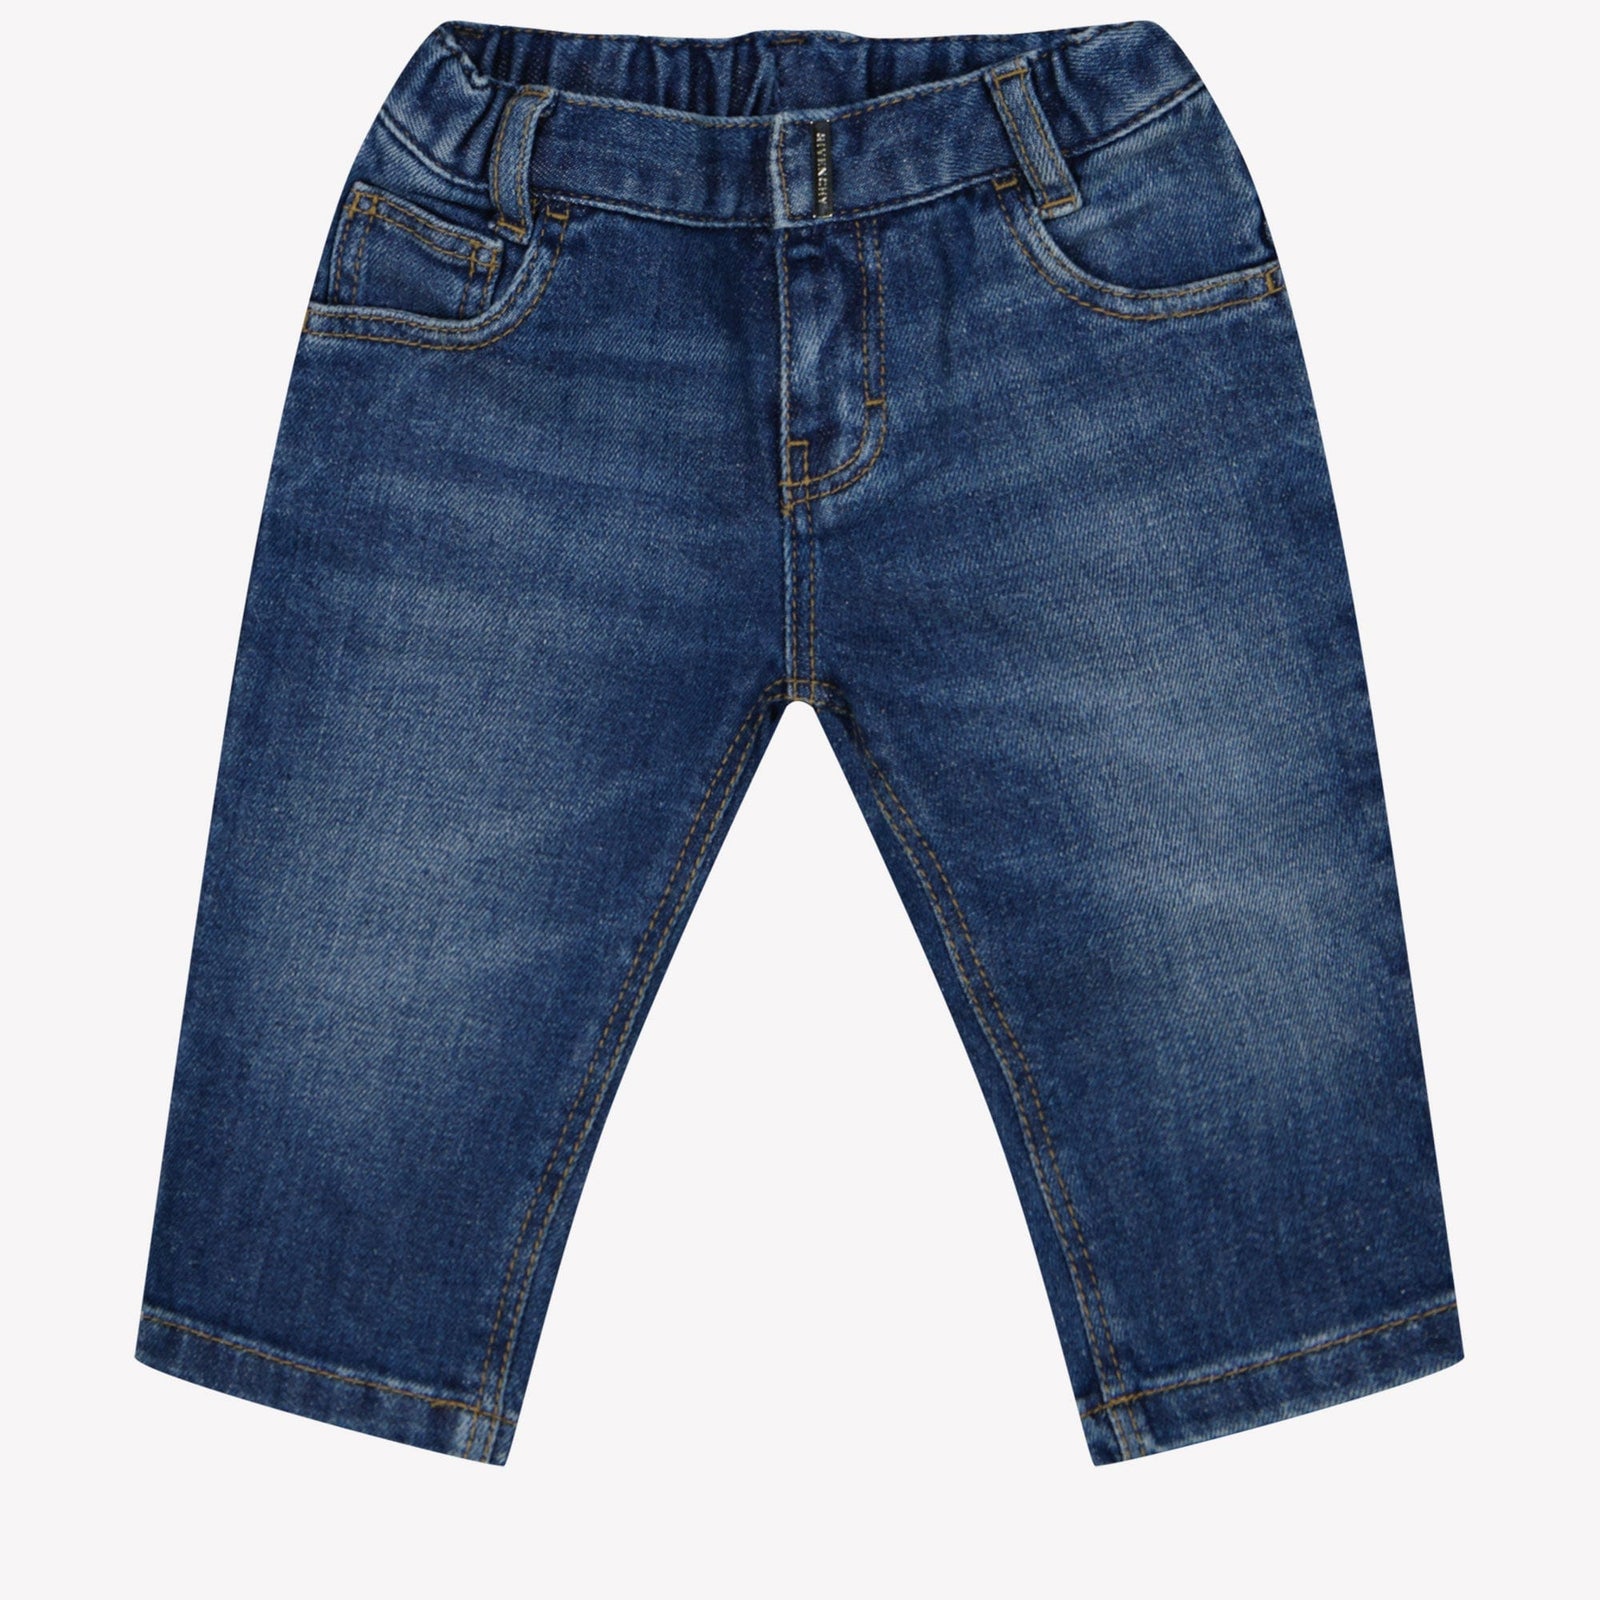 Givenchy Baby Jongens Jeans Blauw 6 mnd